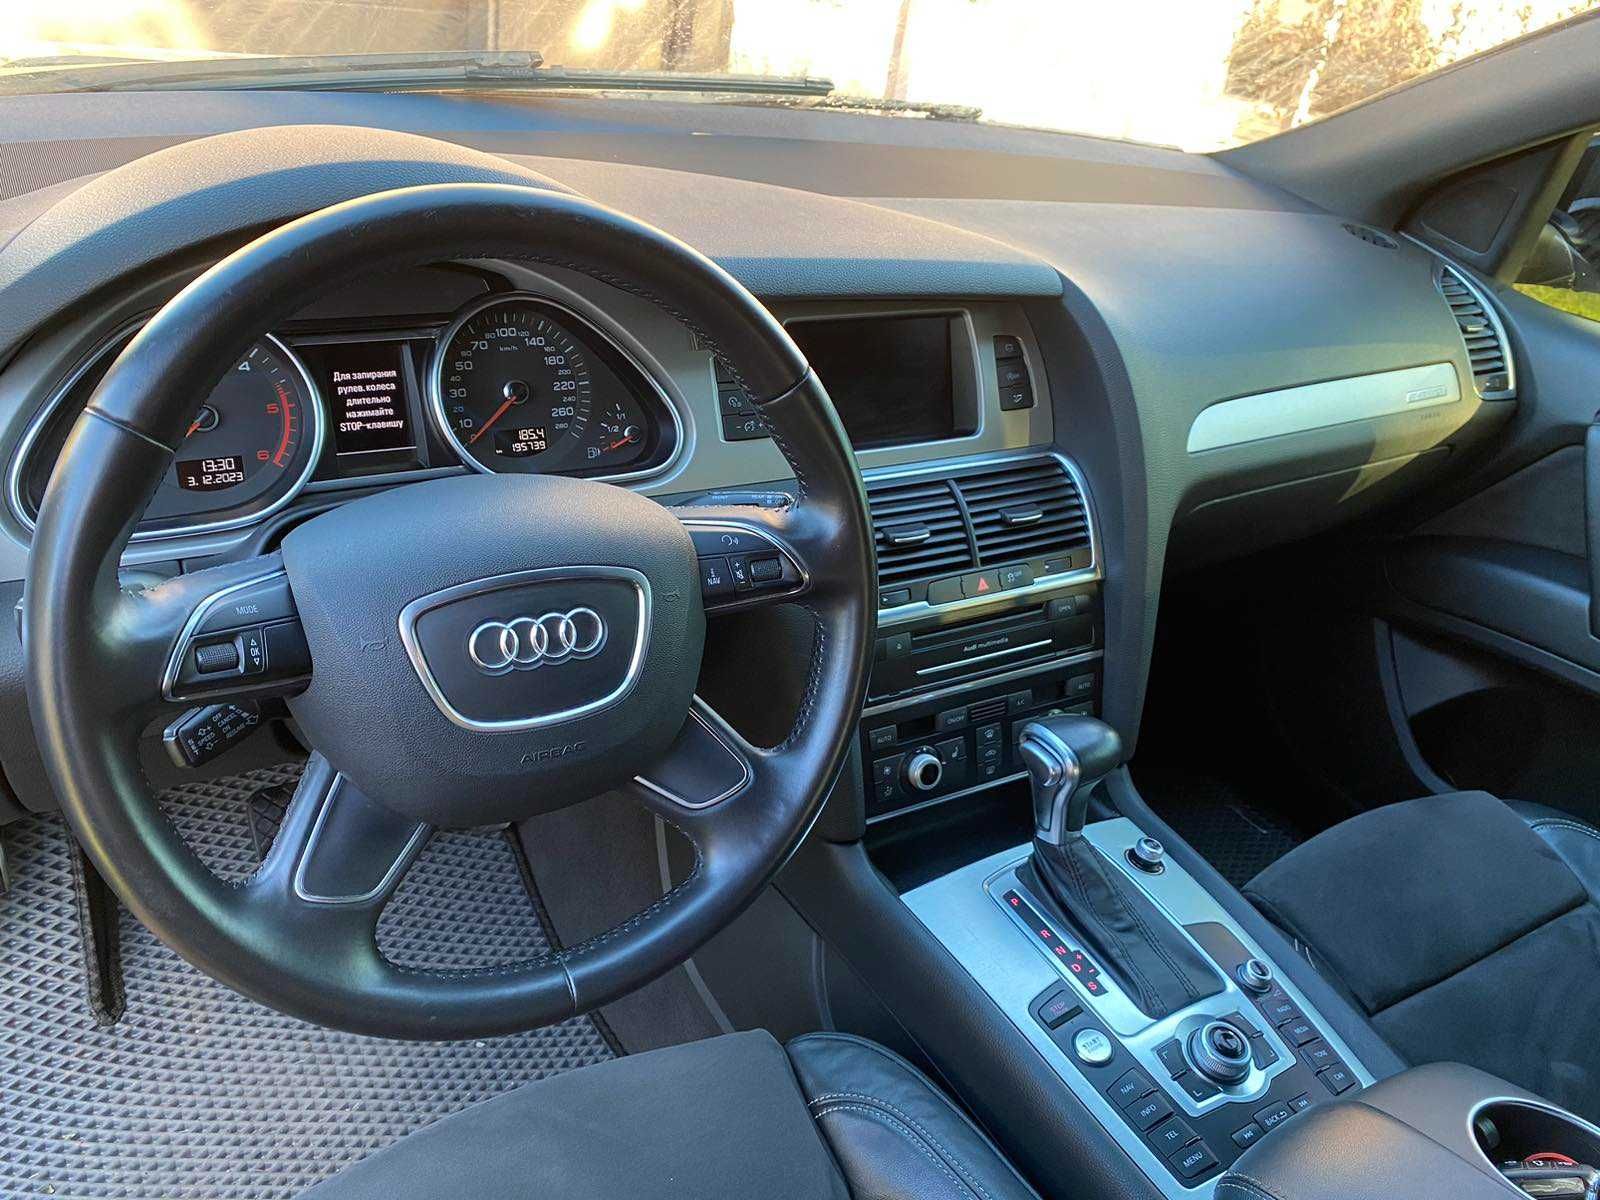 Продаю Audi Q7 2015 год  3.0 тди  Комплектация S line